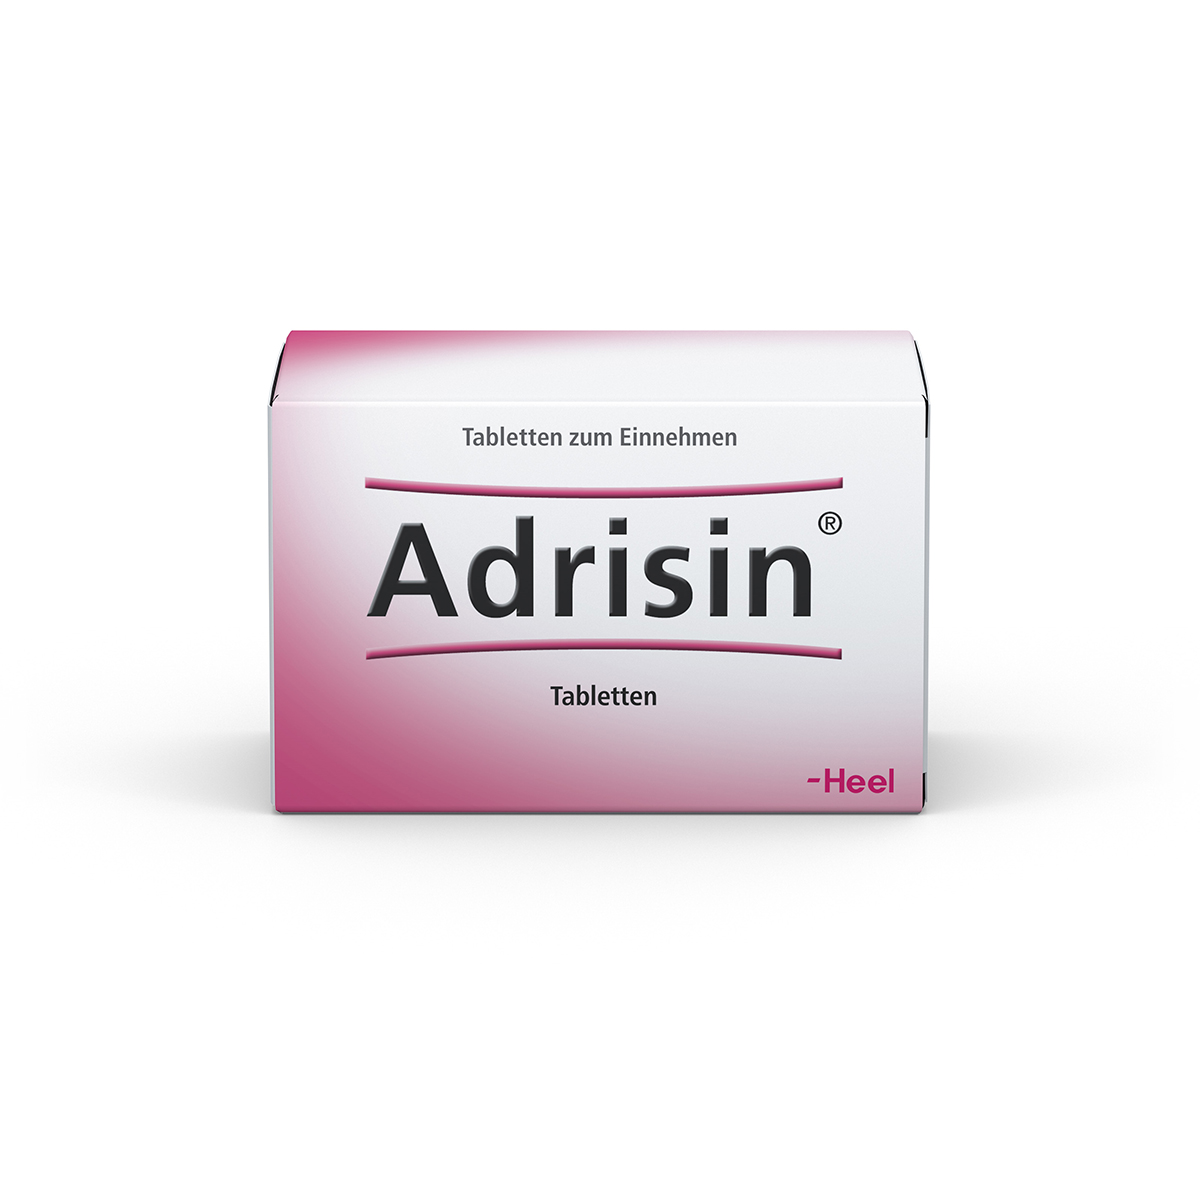 Adrisin® Tabletten Tabletten